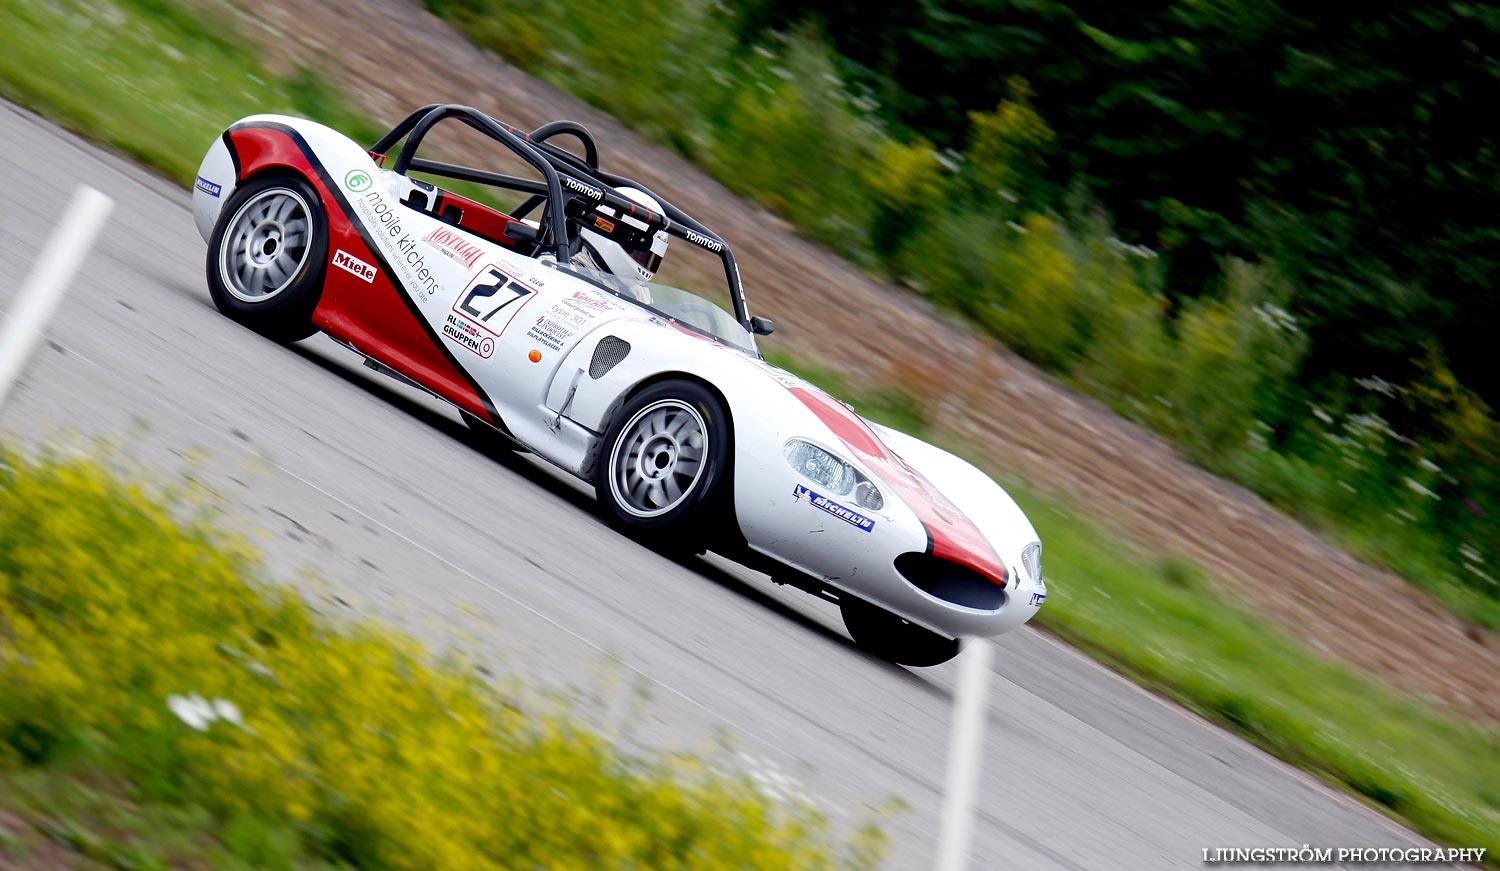 SSK Raceweek,mix,Kinnekulle Ring,Götene,Sverige,Motorsport,,2009,107697